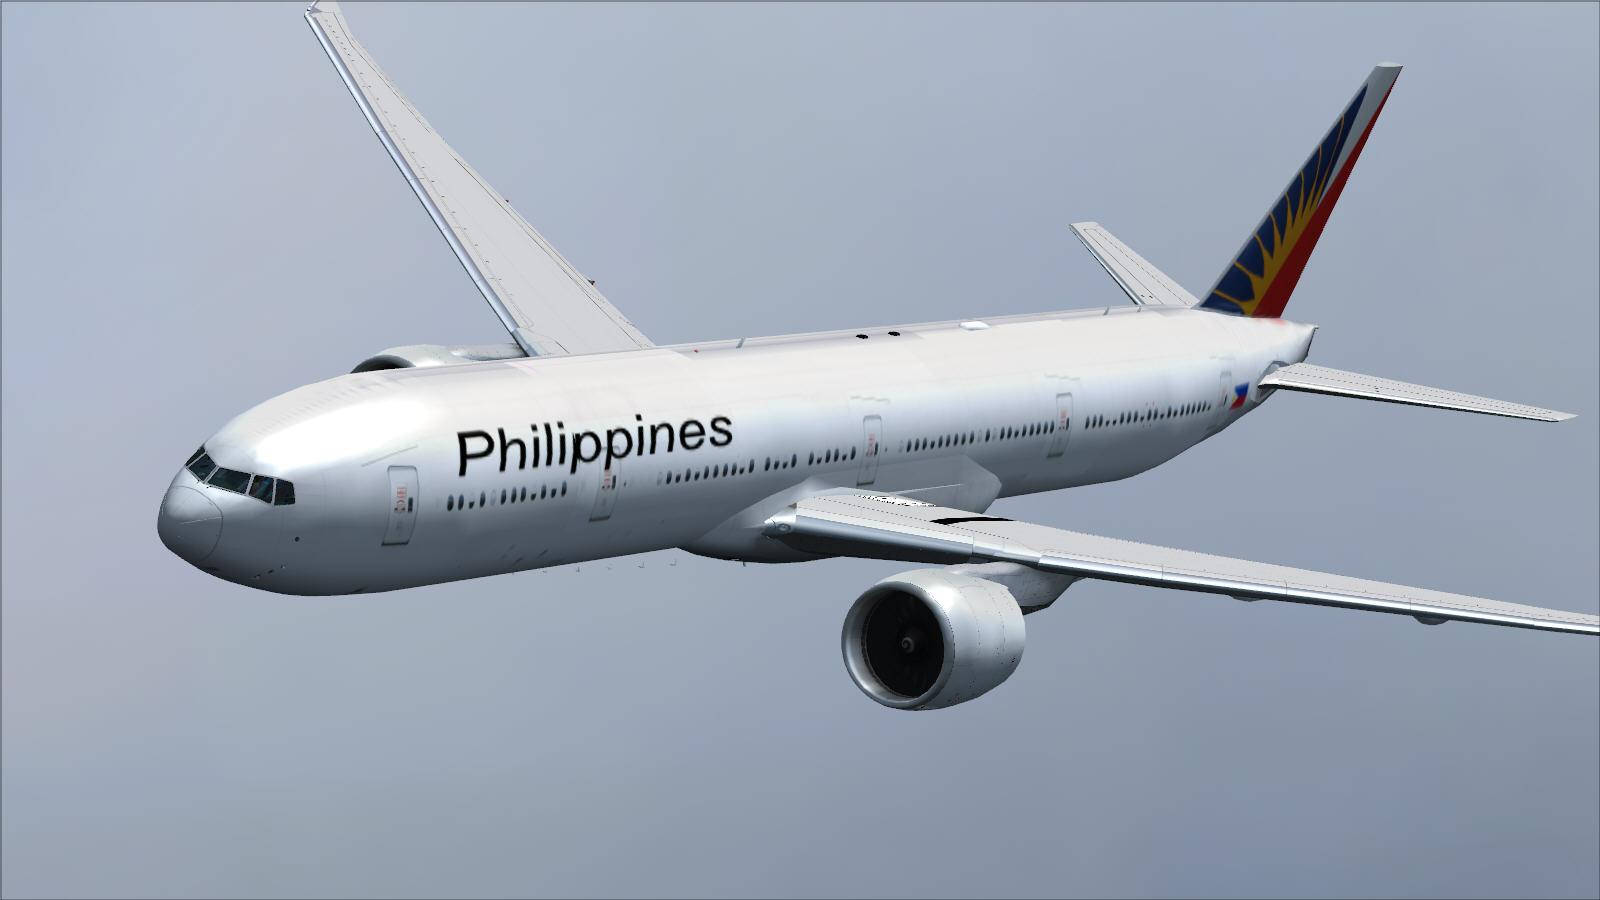 Philippinske Airlines Hvid Stor Flyvende Fly Wallpaper Wallpaper